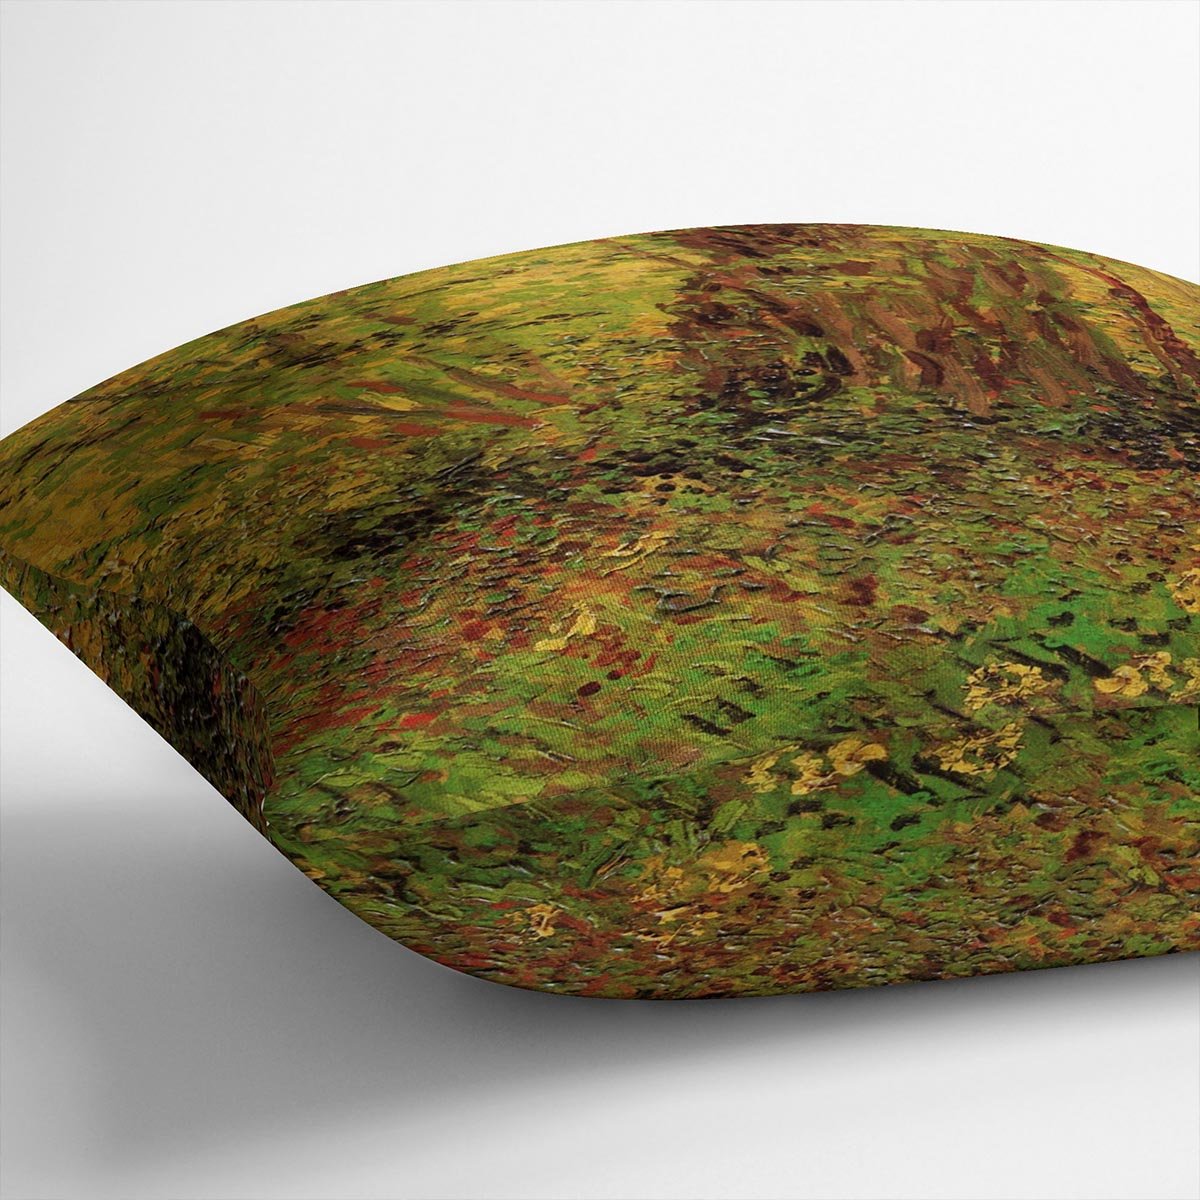 Undergrowth 2 by Van Gogh Throw Pillow